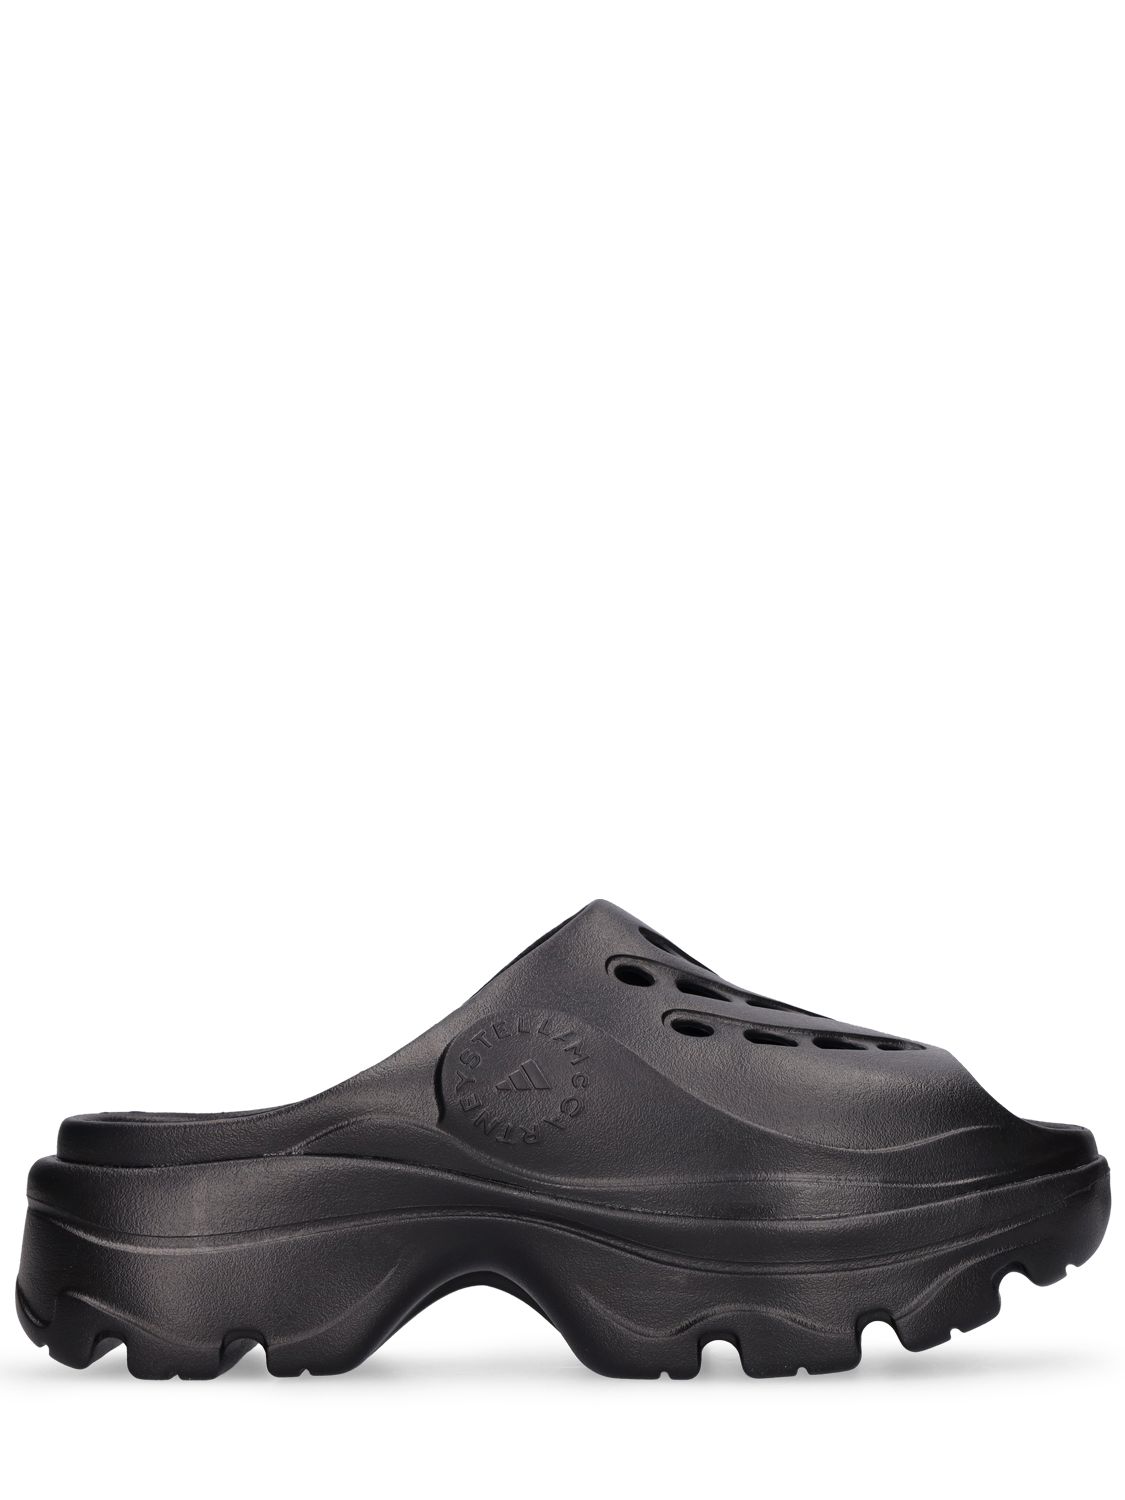 Adidas By Stella Mccartney Asmc Platform Slide Sandals In Black